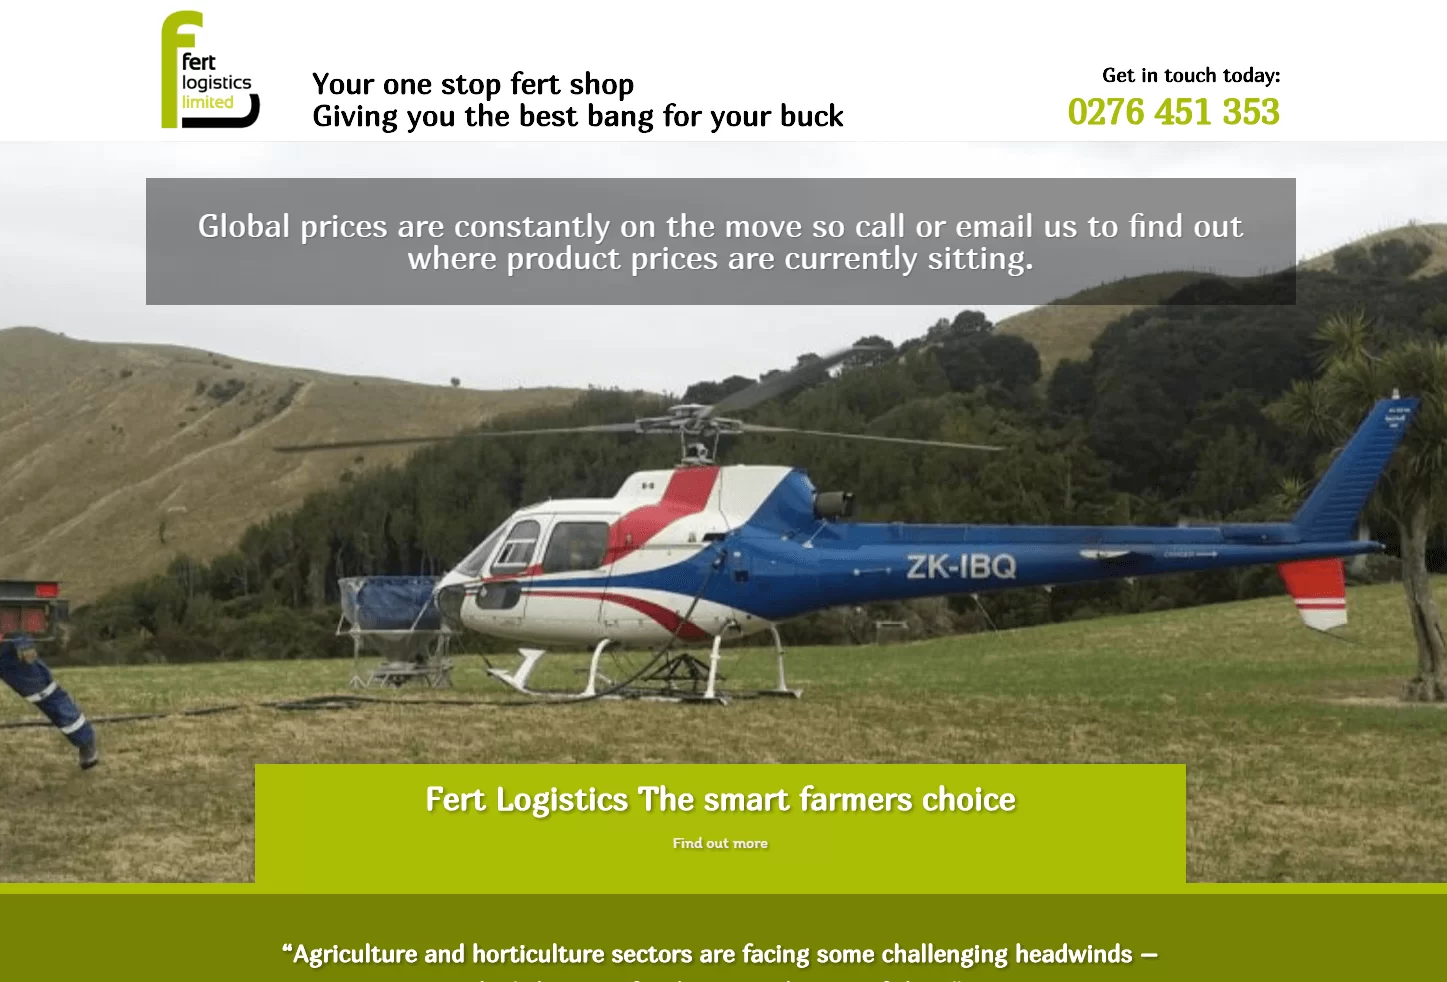 Fertiliser Logistics Ltd